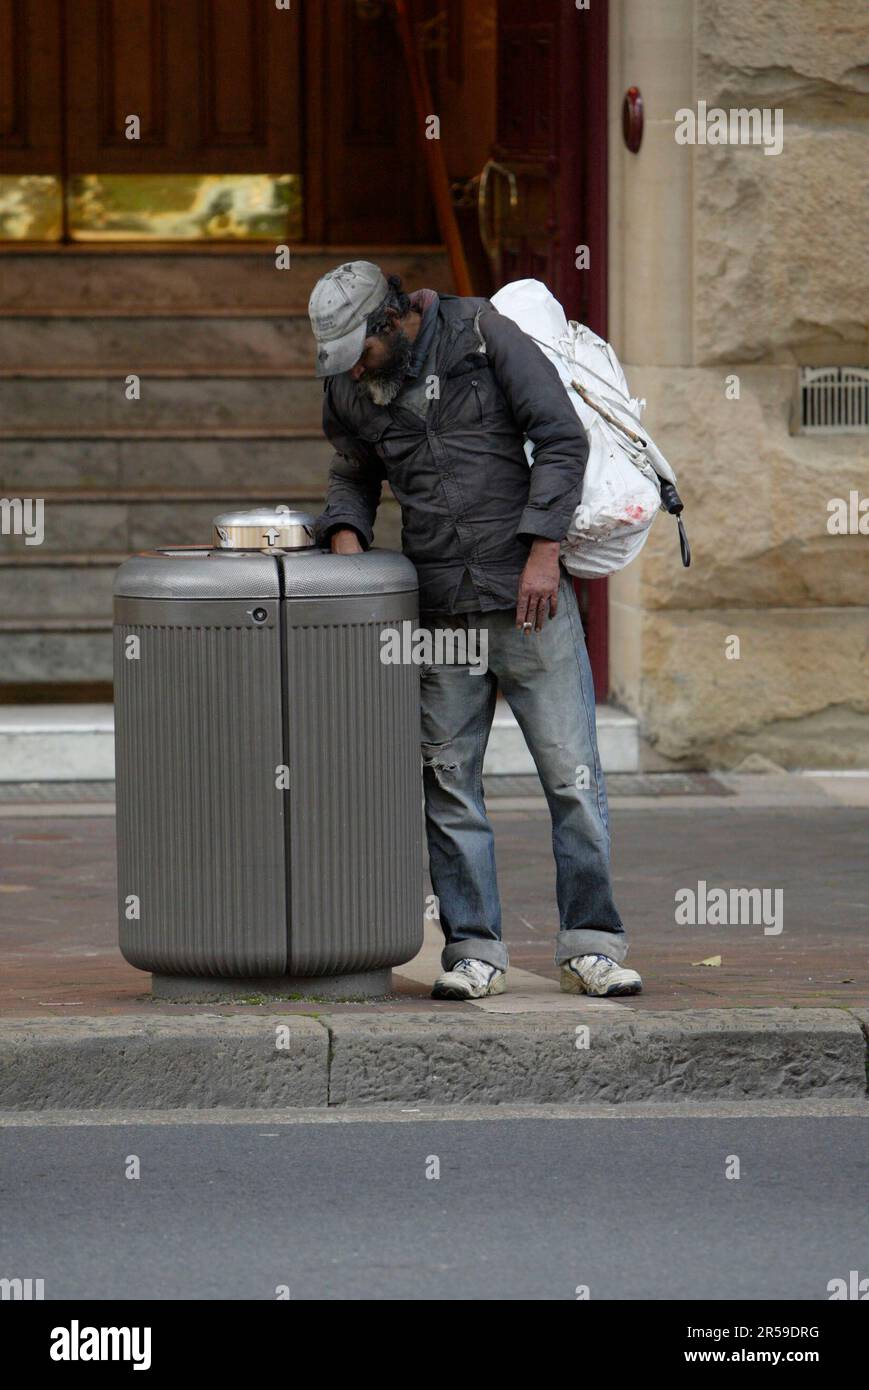 A homeless man rummages through a garbage bin on Macquarie Street in ...